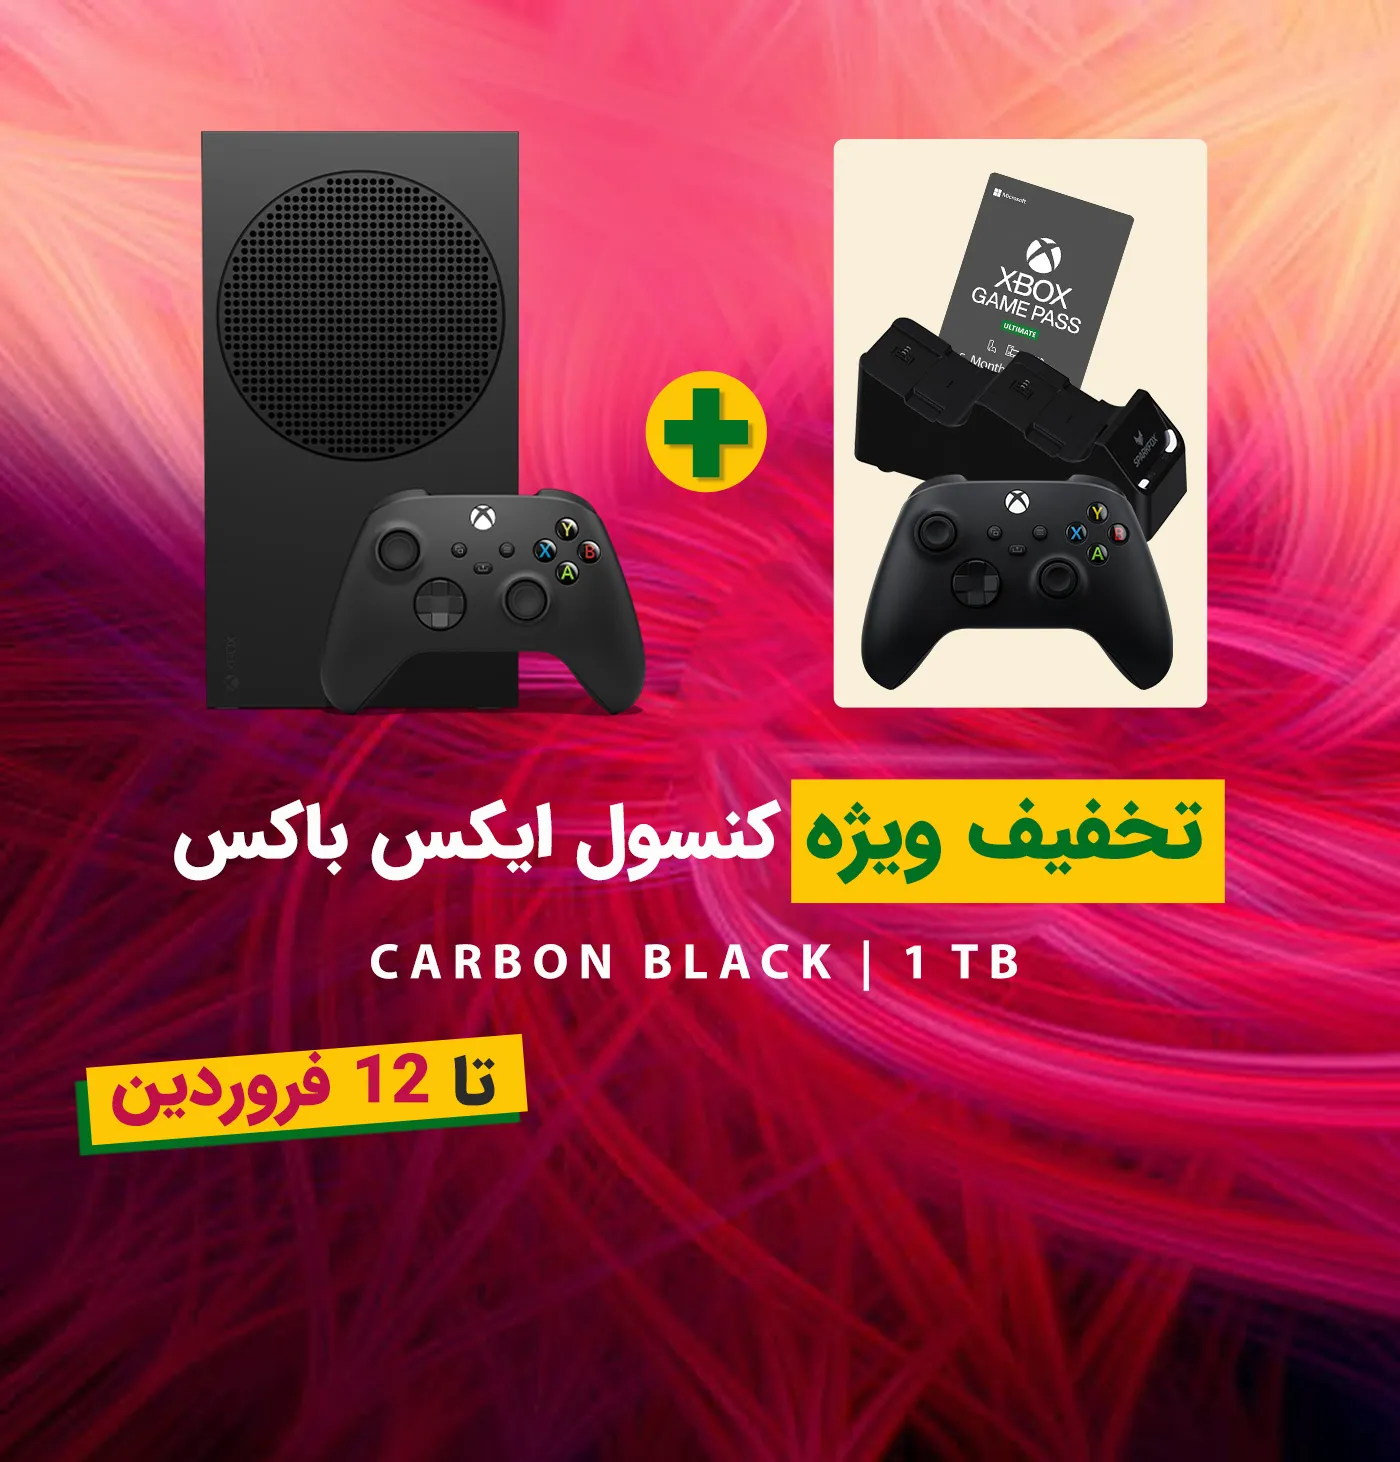 Xbox Carbon Black mob 1